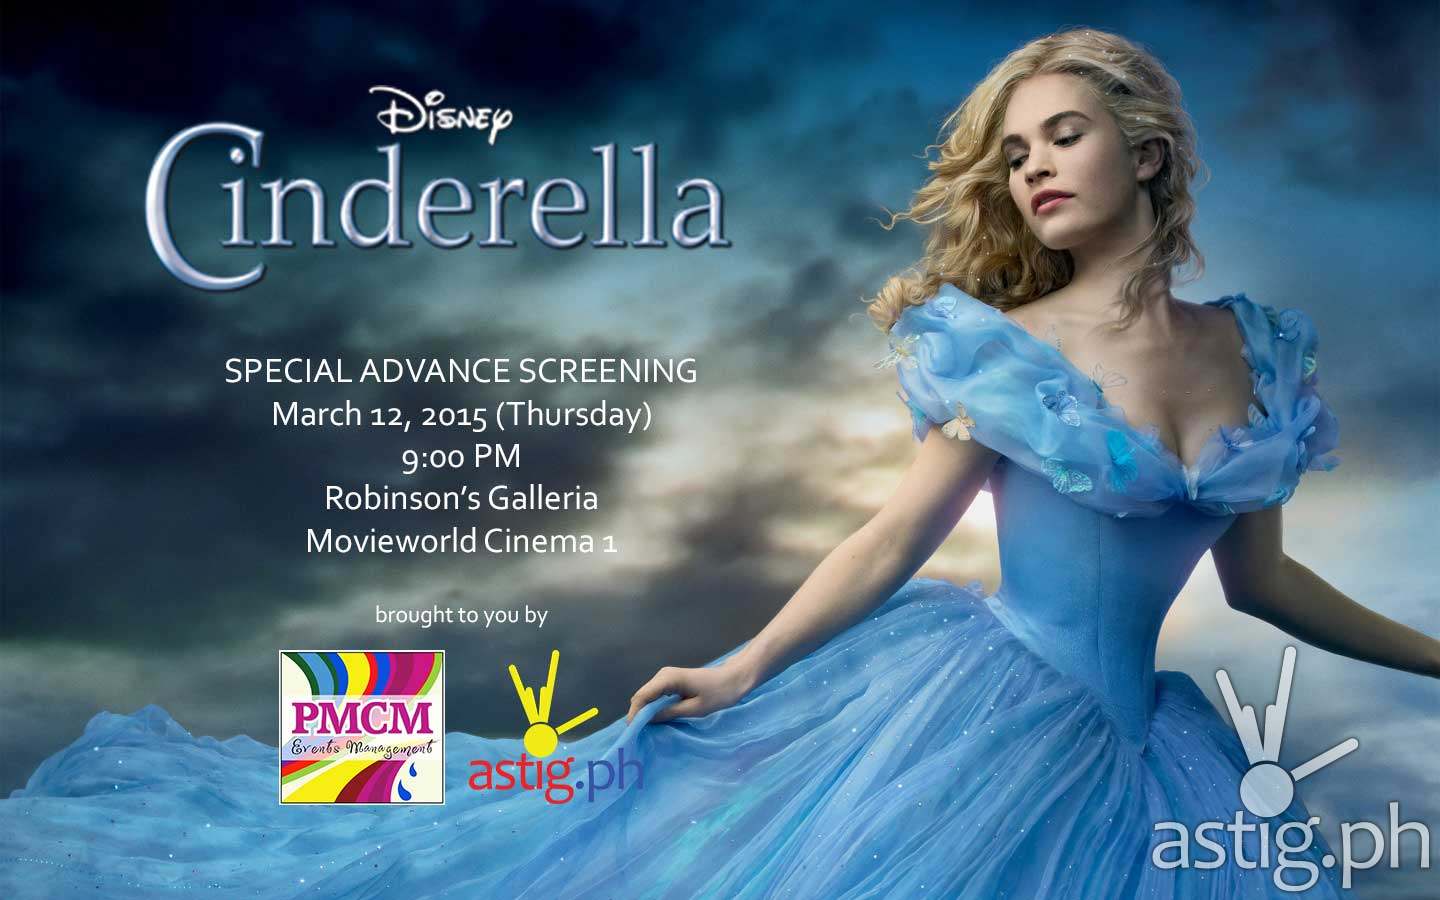 Walt Disney's Cinderella: The movie special advance block screening giveaway